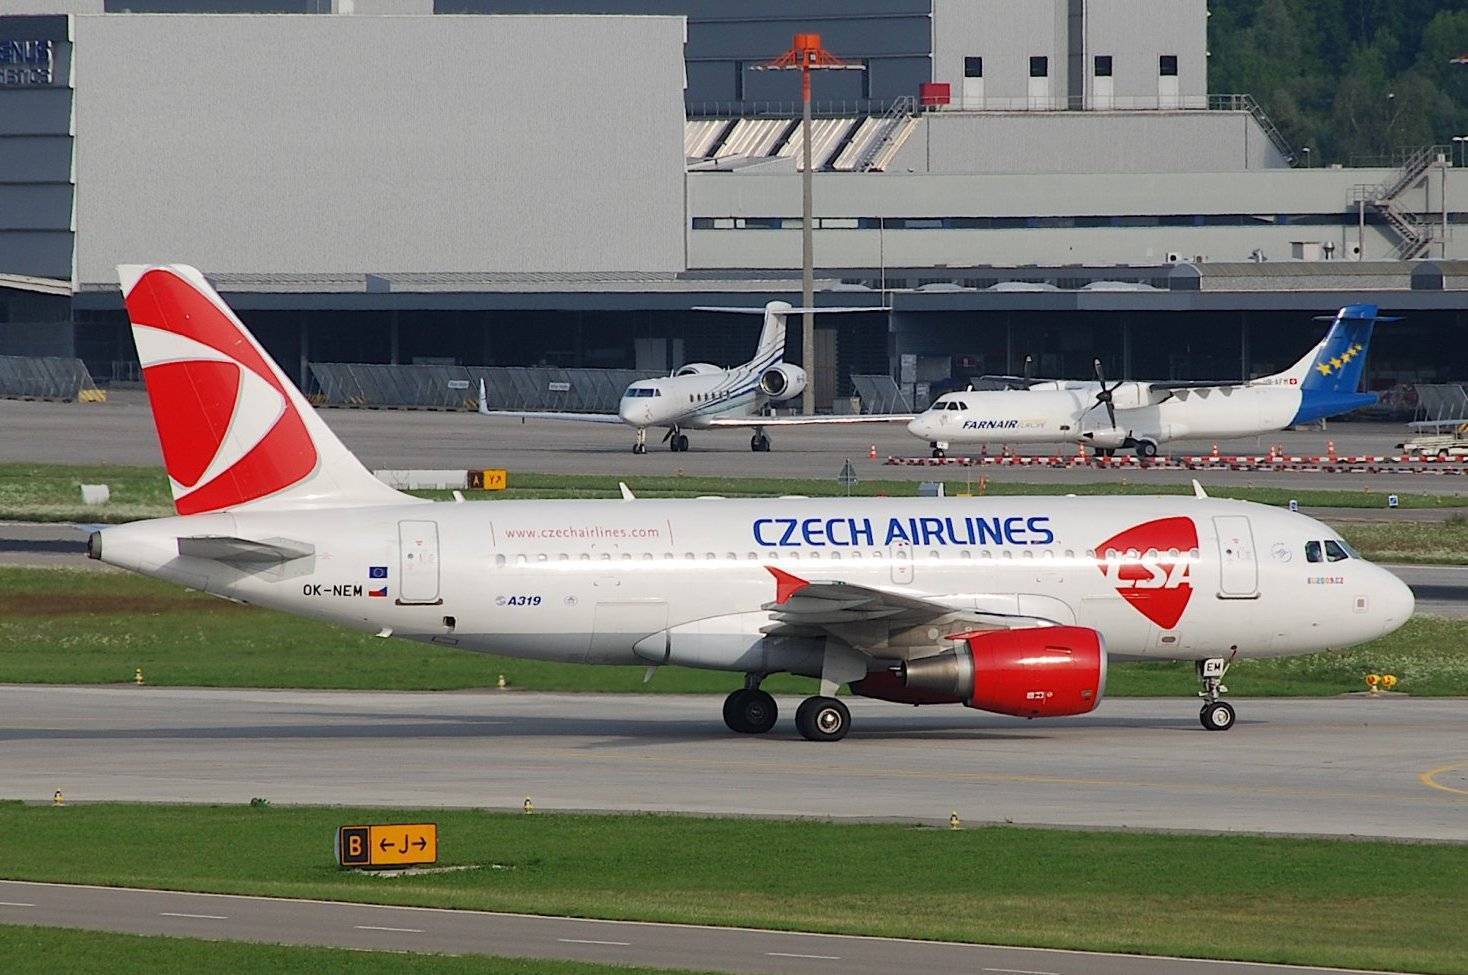 Чешские авиалинии - czech airlines - abcdef.wiki